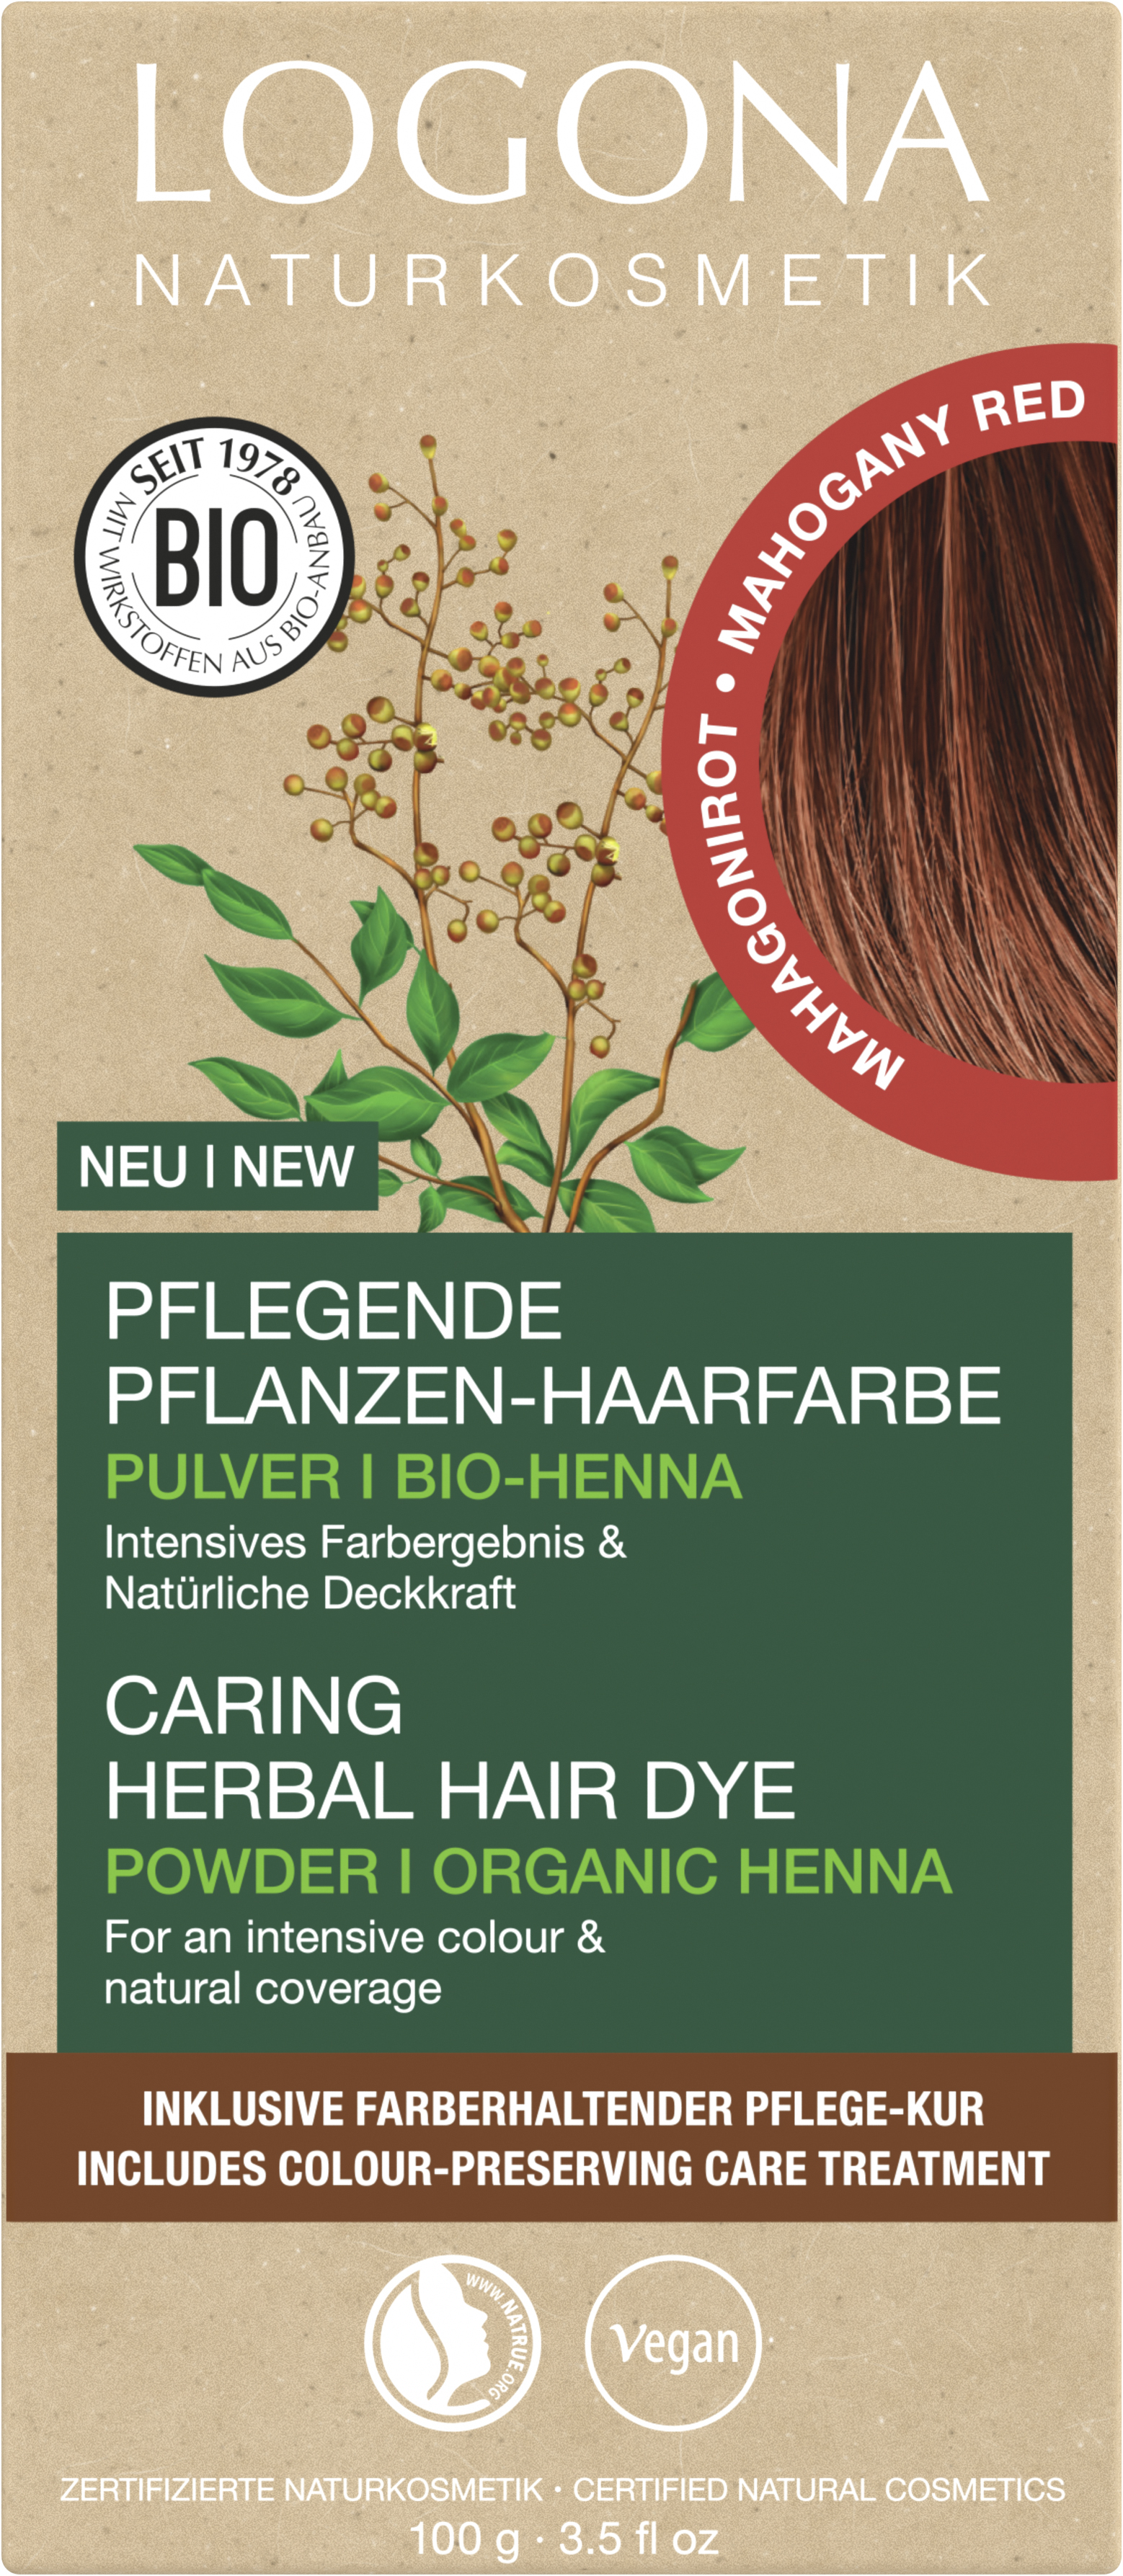 | LOGONA Naturkosmetik MAHAGONIROT Pulver Pflanzen-Haarfarbe